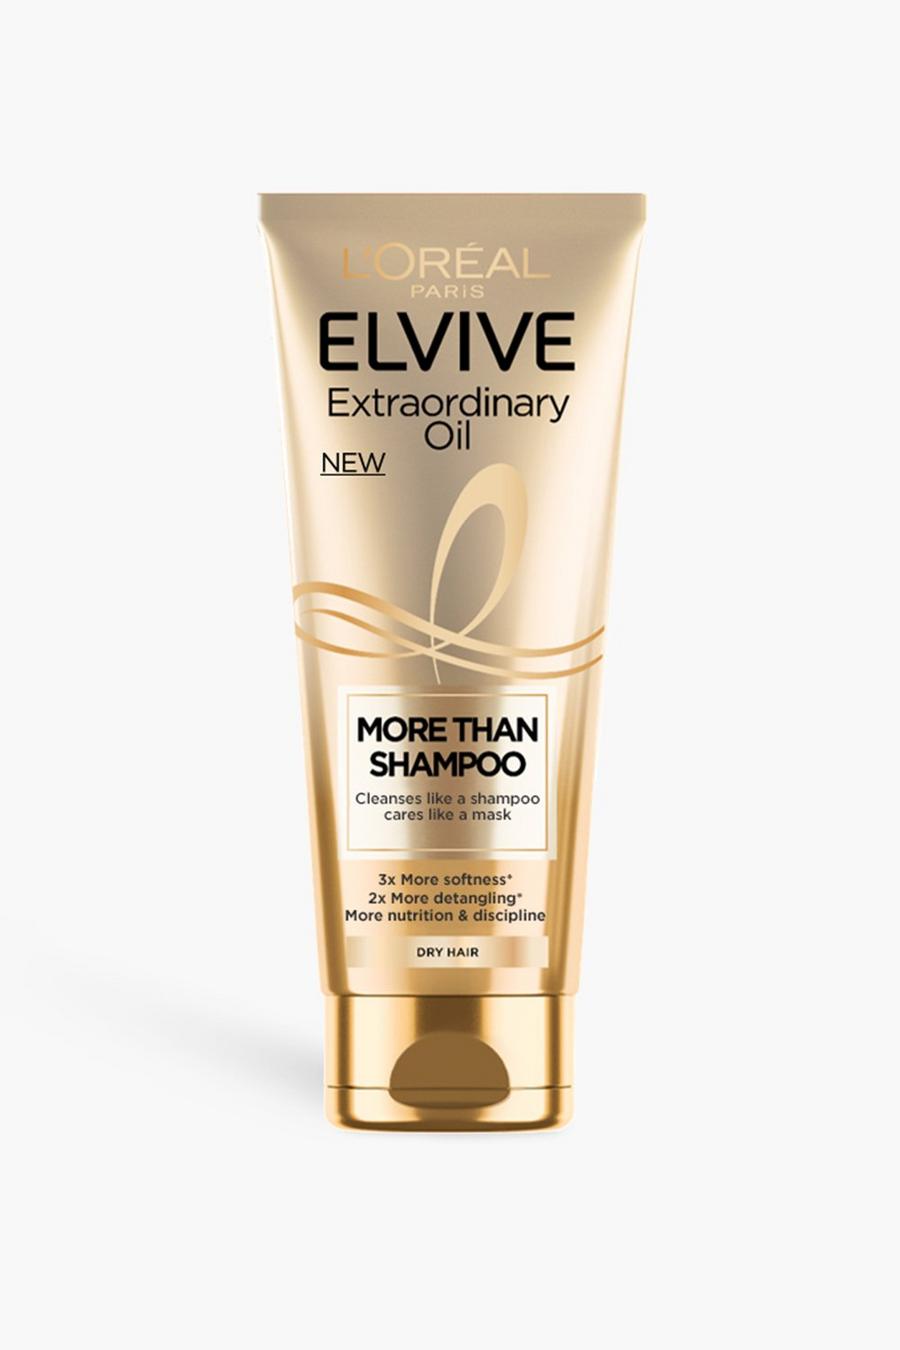 Shampoo Extraordinary Oil L’Oreal Elvive, Oro metallic